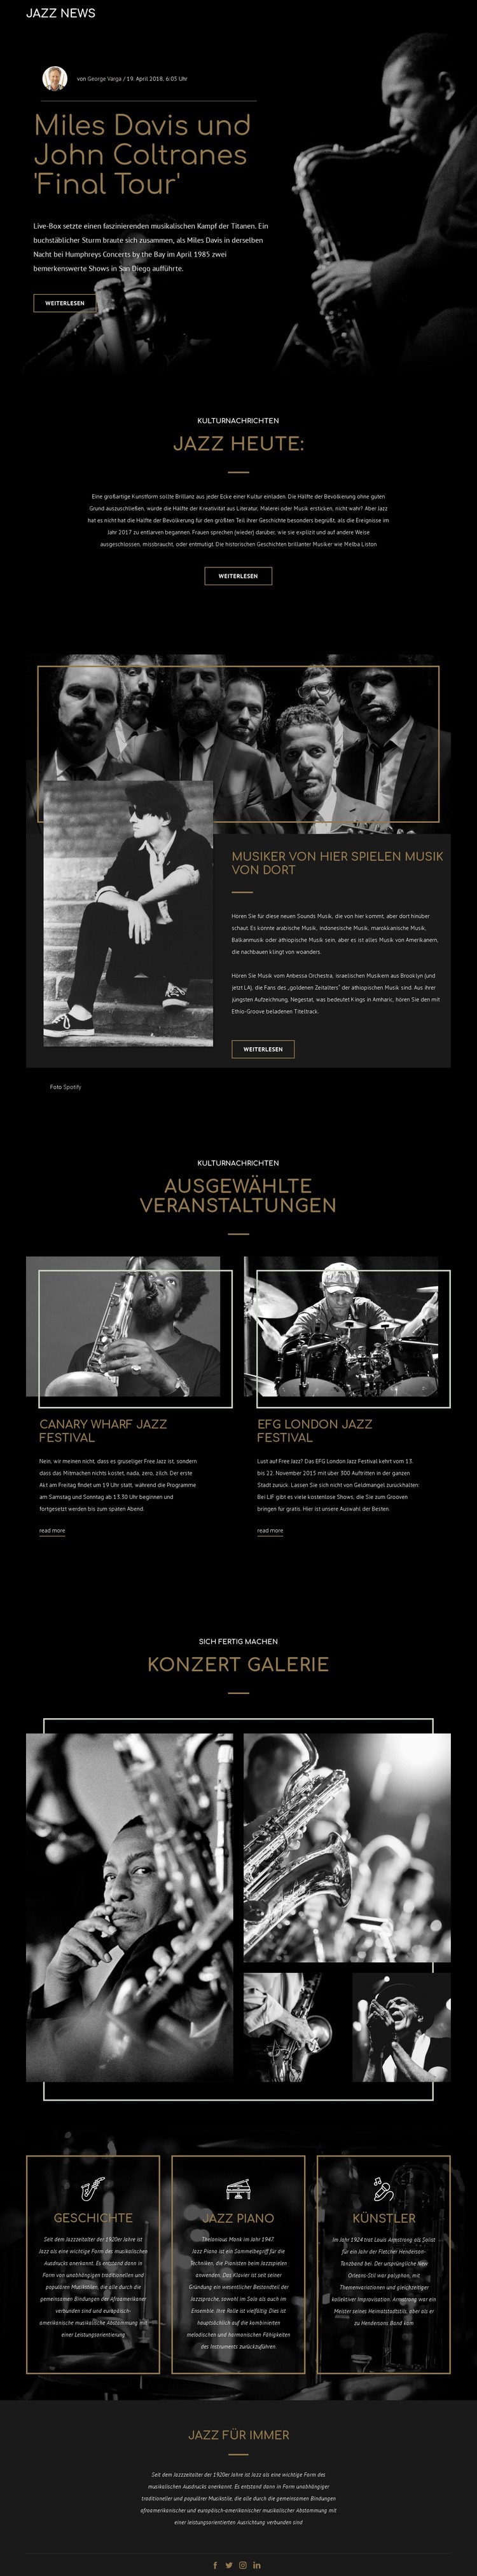 Legengs der Jazzmusik Website design